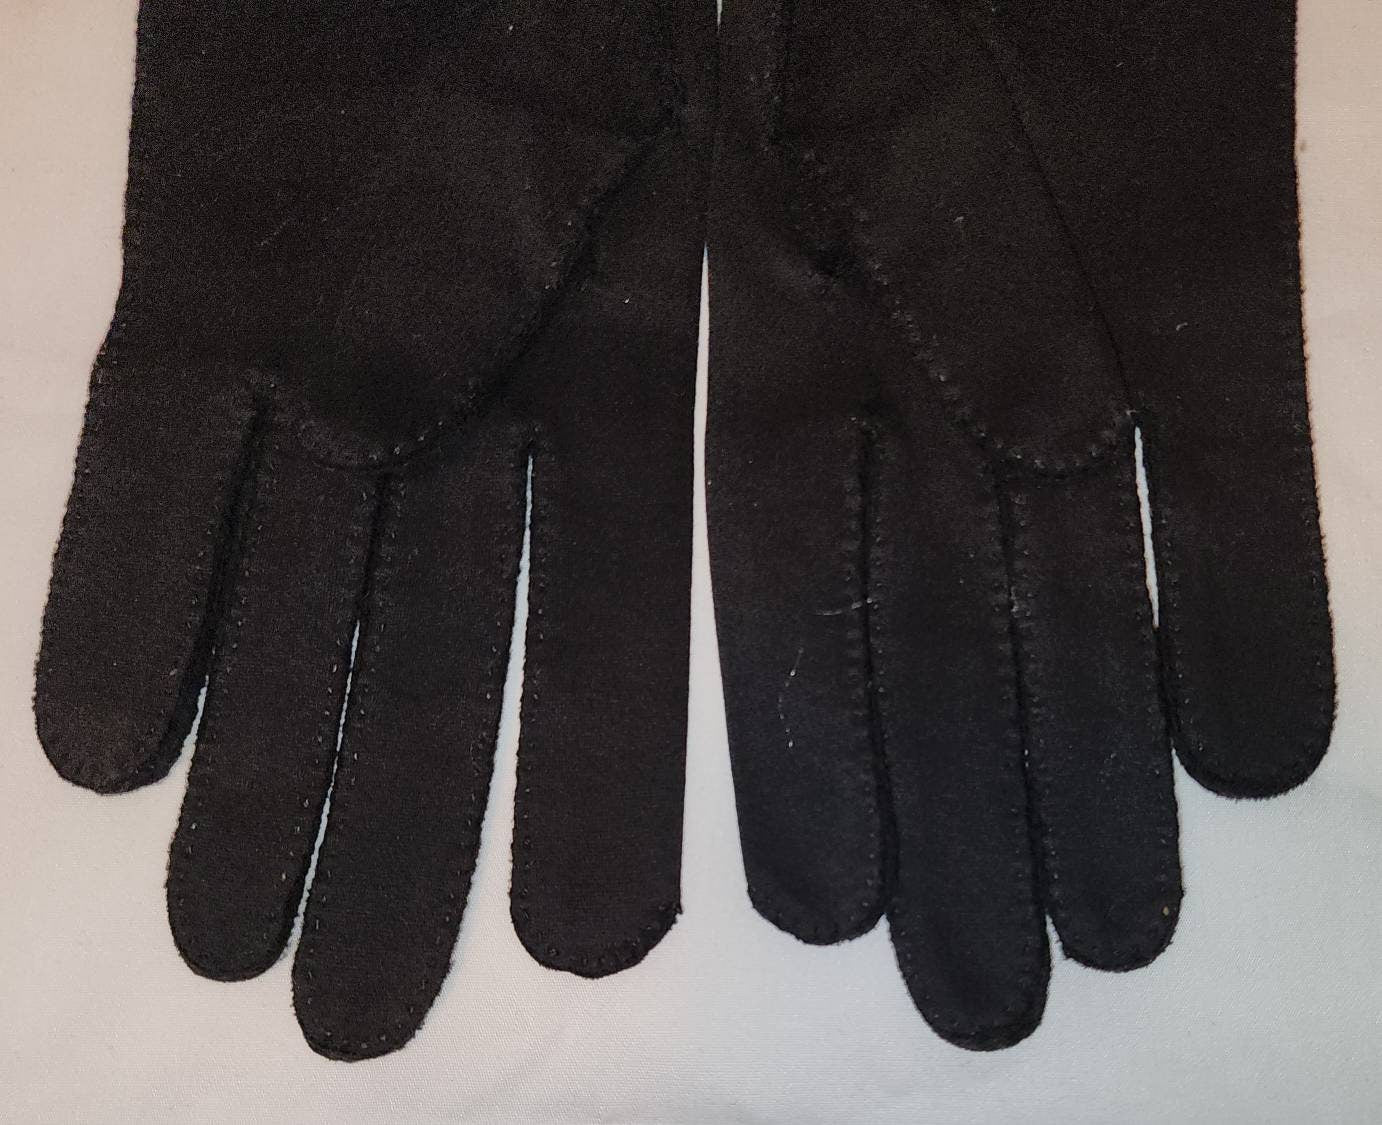 Unworn Vintage Gloves 1940s Black Fabric Gloves Circles Tiny Stud Detail Elvette Art Deco Mid Century Rockabilly NWT 7 1/2